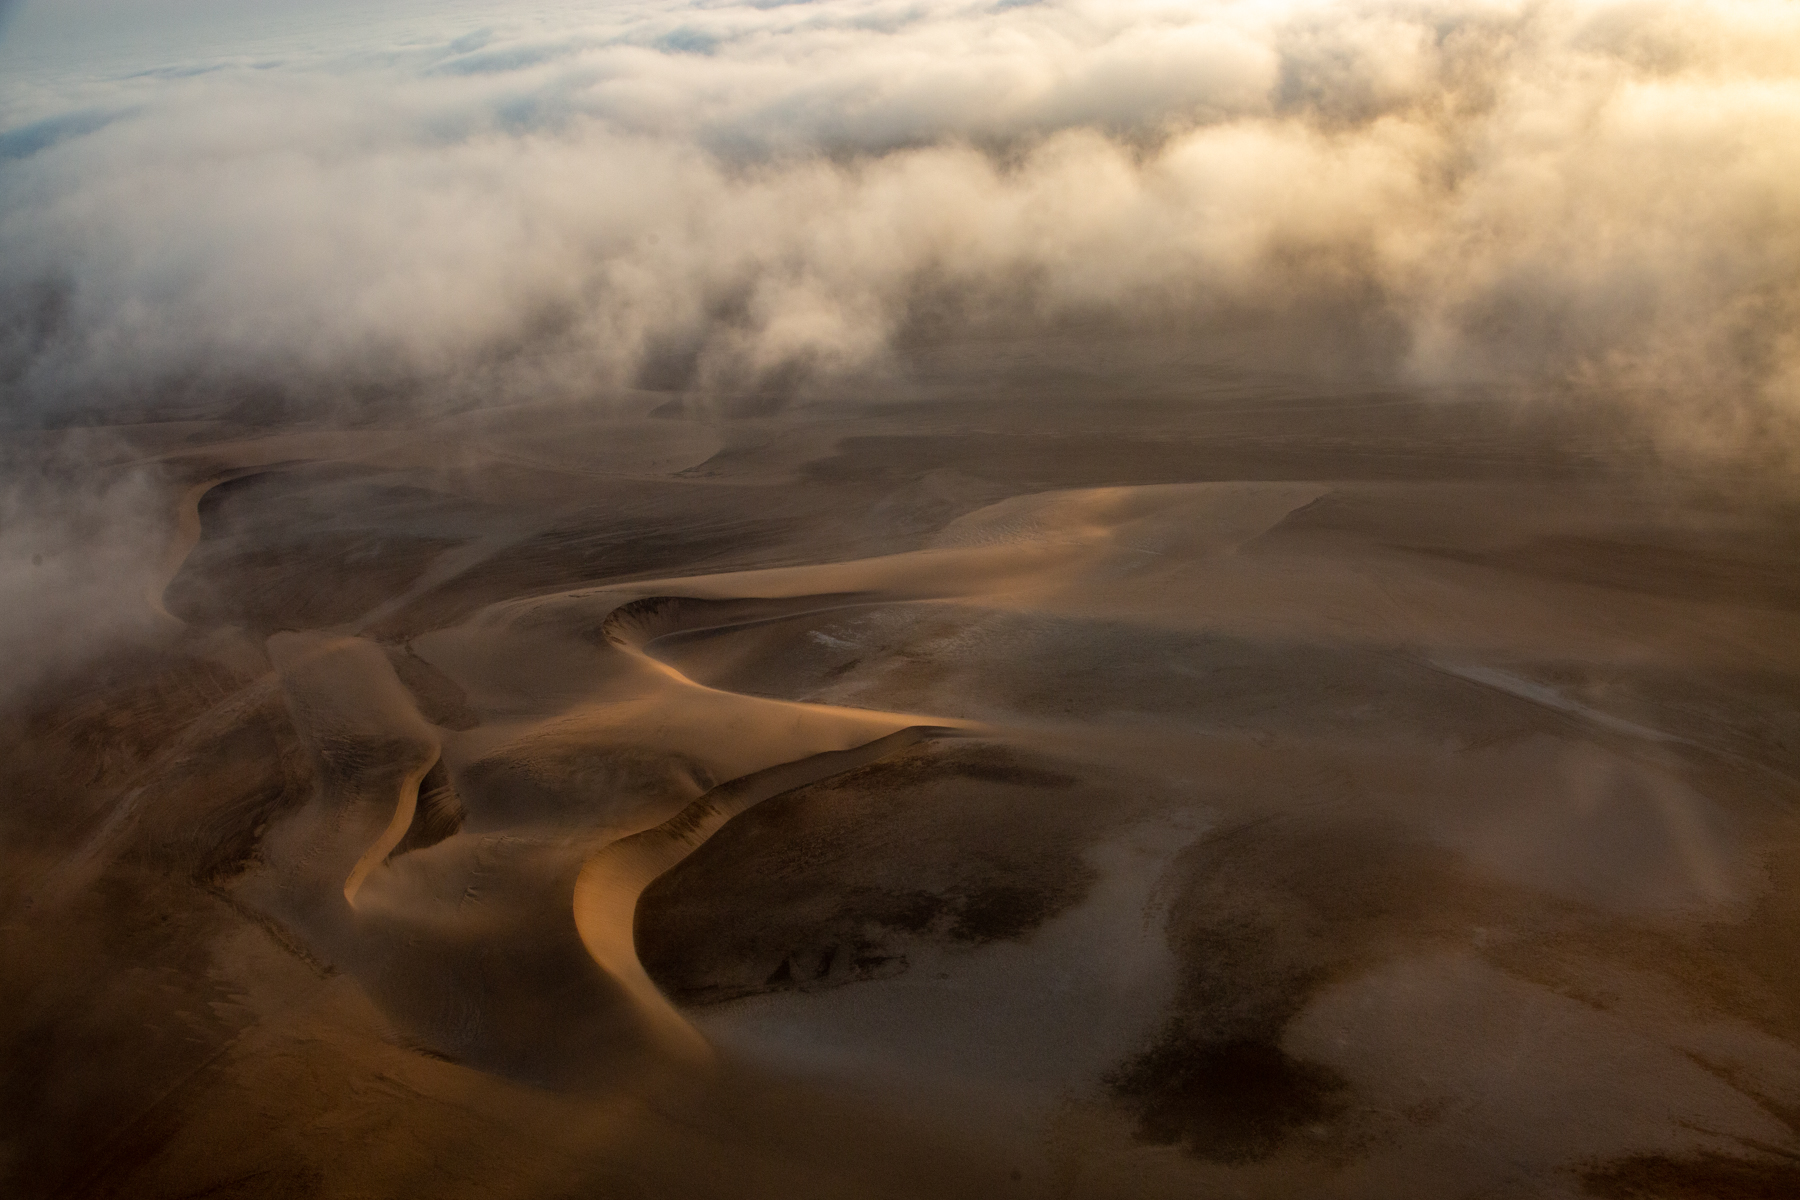 Sun shines through the encroaching fog over the Skeleton Coast in Namibia